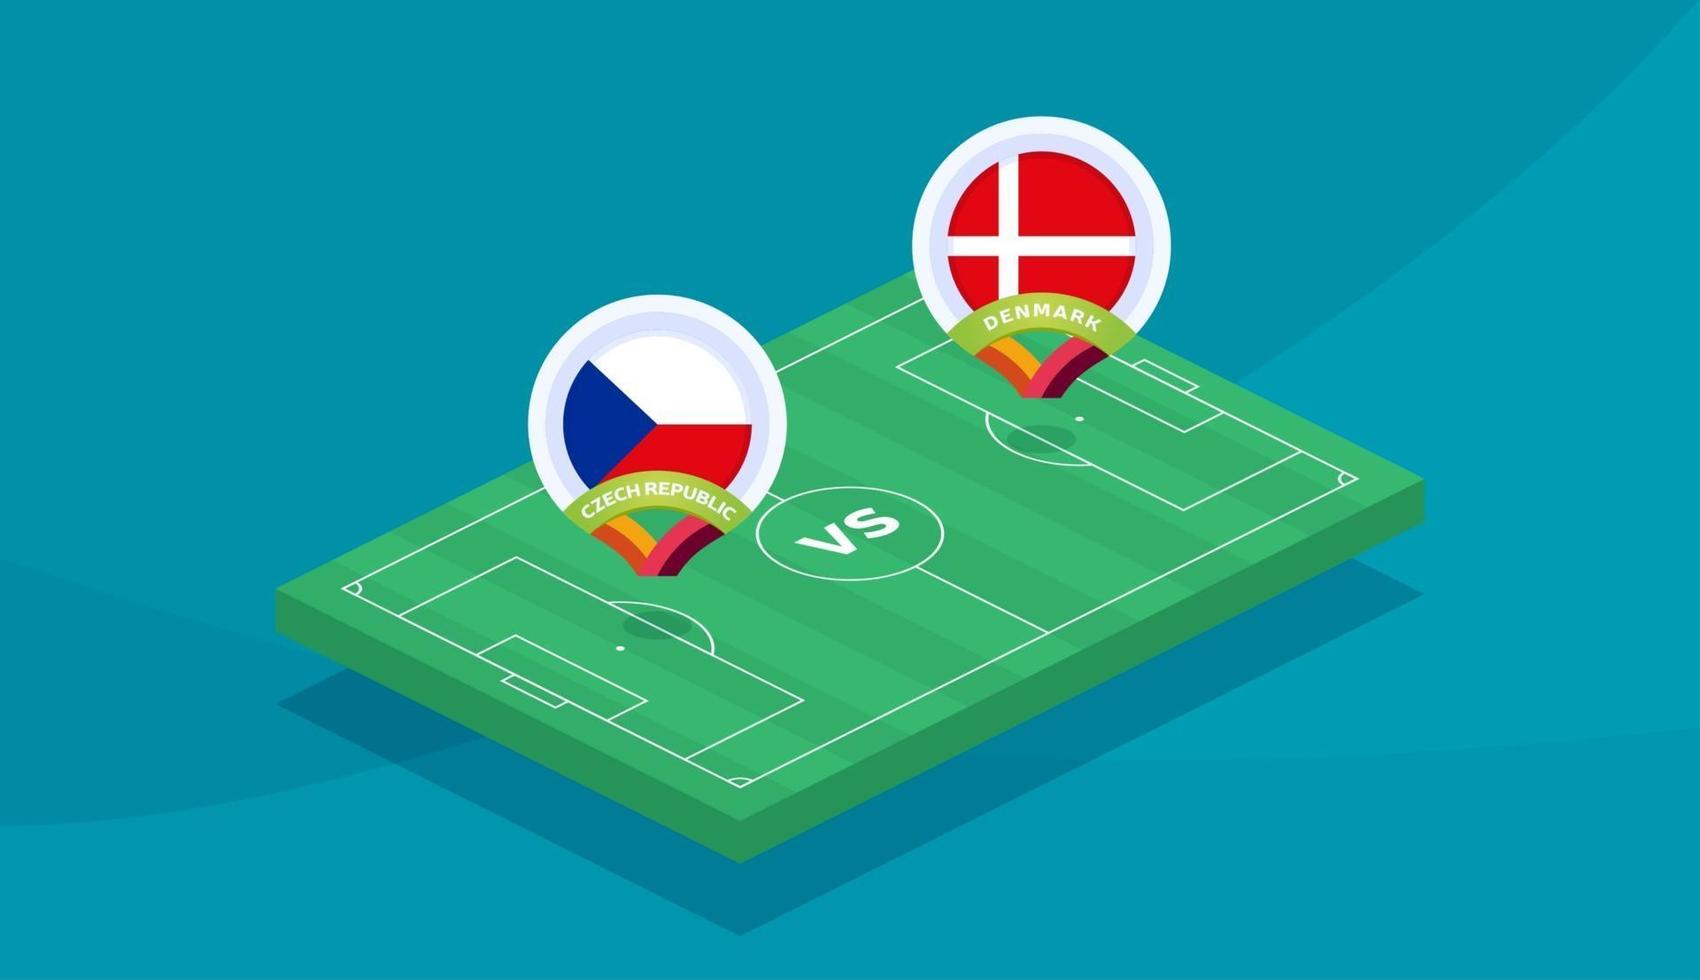 czech republic vs denmark match vector illustration Football 2020 championship